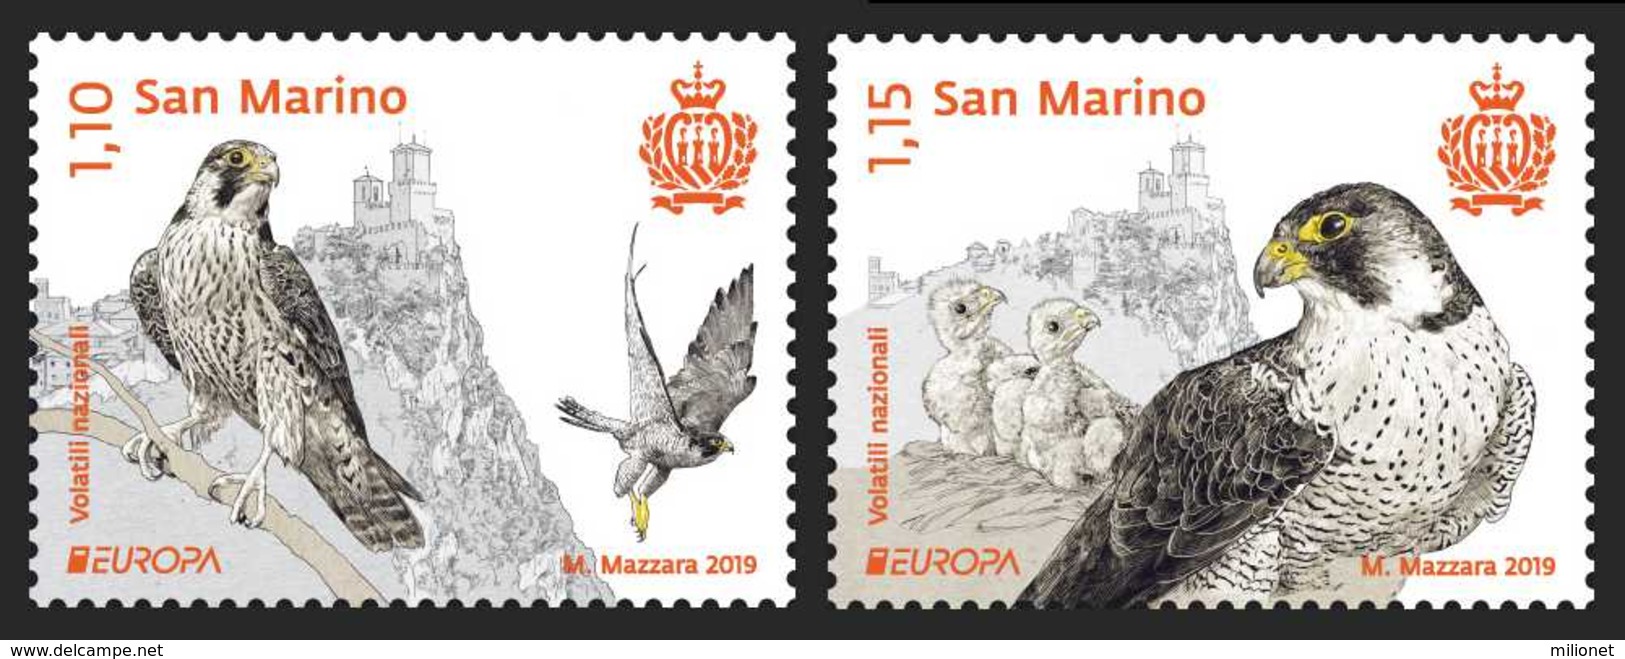 SAN MARINO 2019 EUROPA BIRDS 2 Stamps ** - 2019